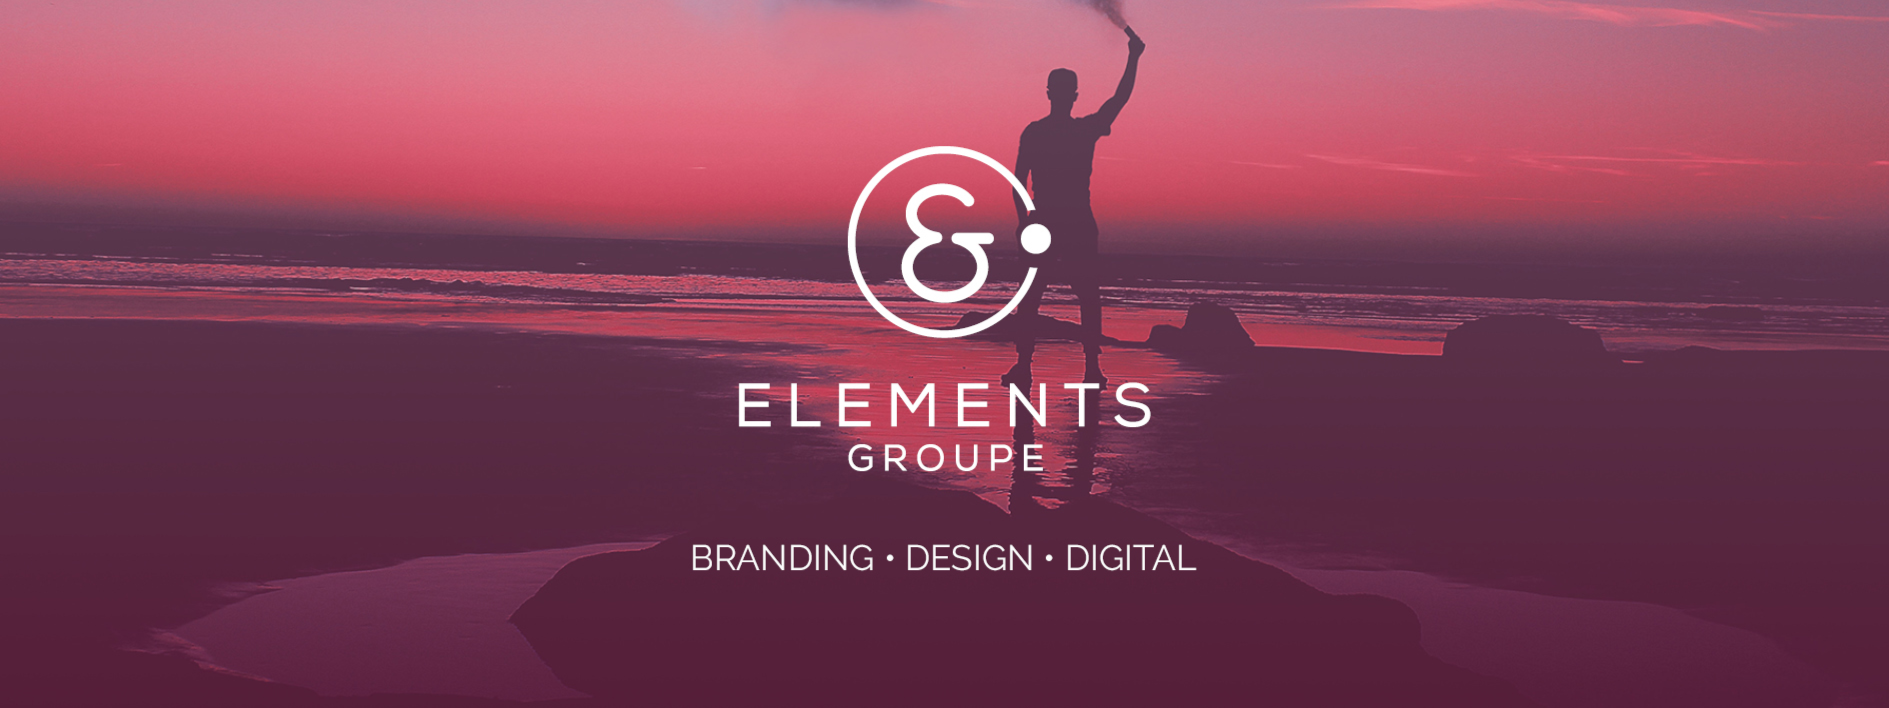 header-elementsgroupe